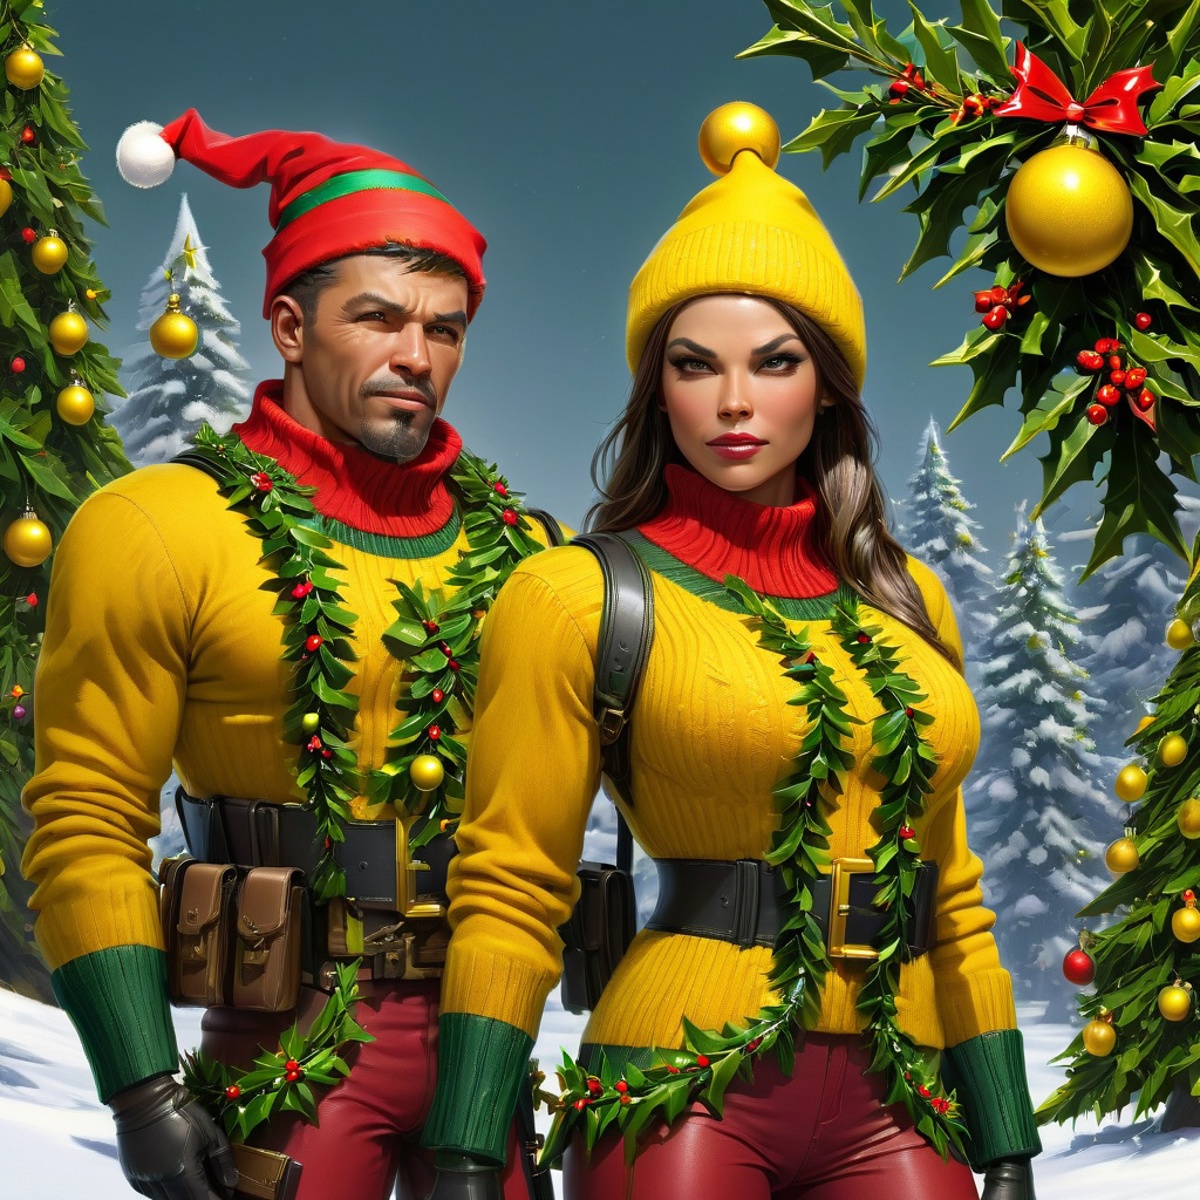 Mistletoe Mercenaries - sliders - yellow team image contest helper image by kashyyyk